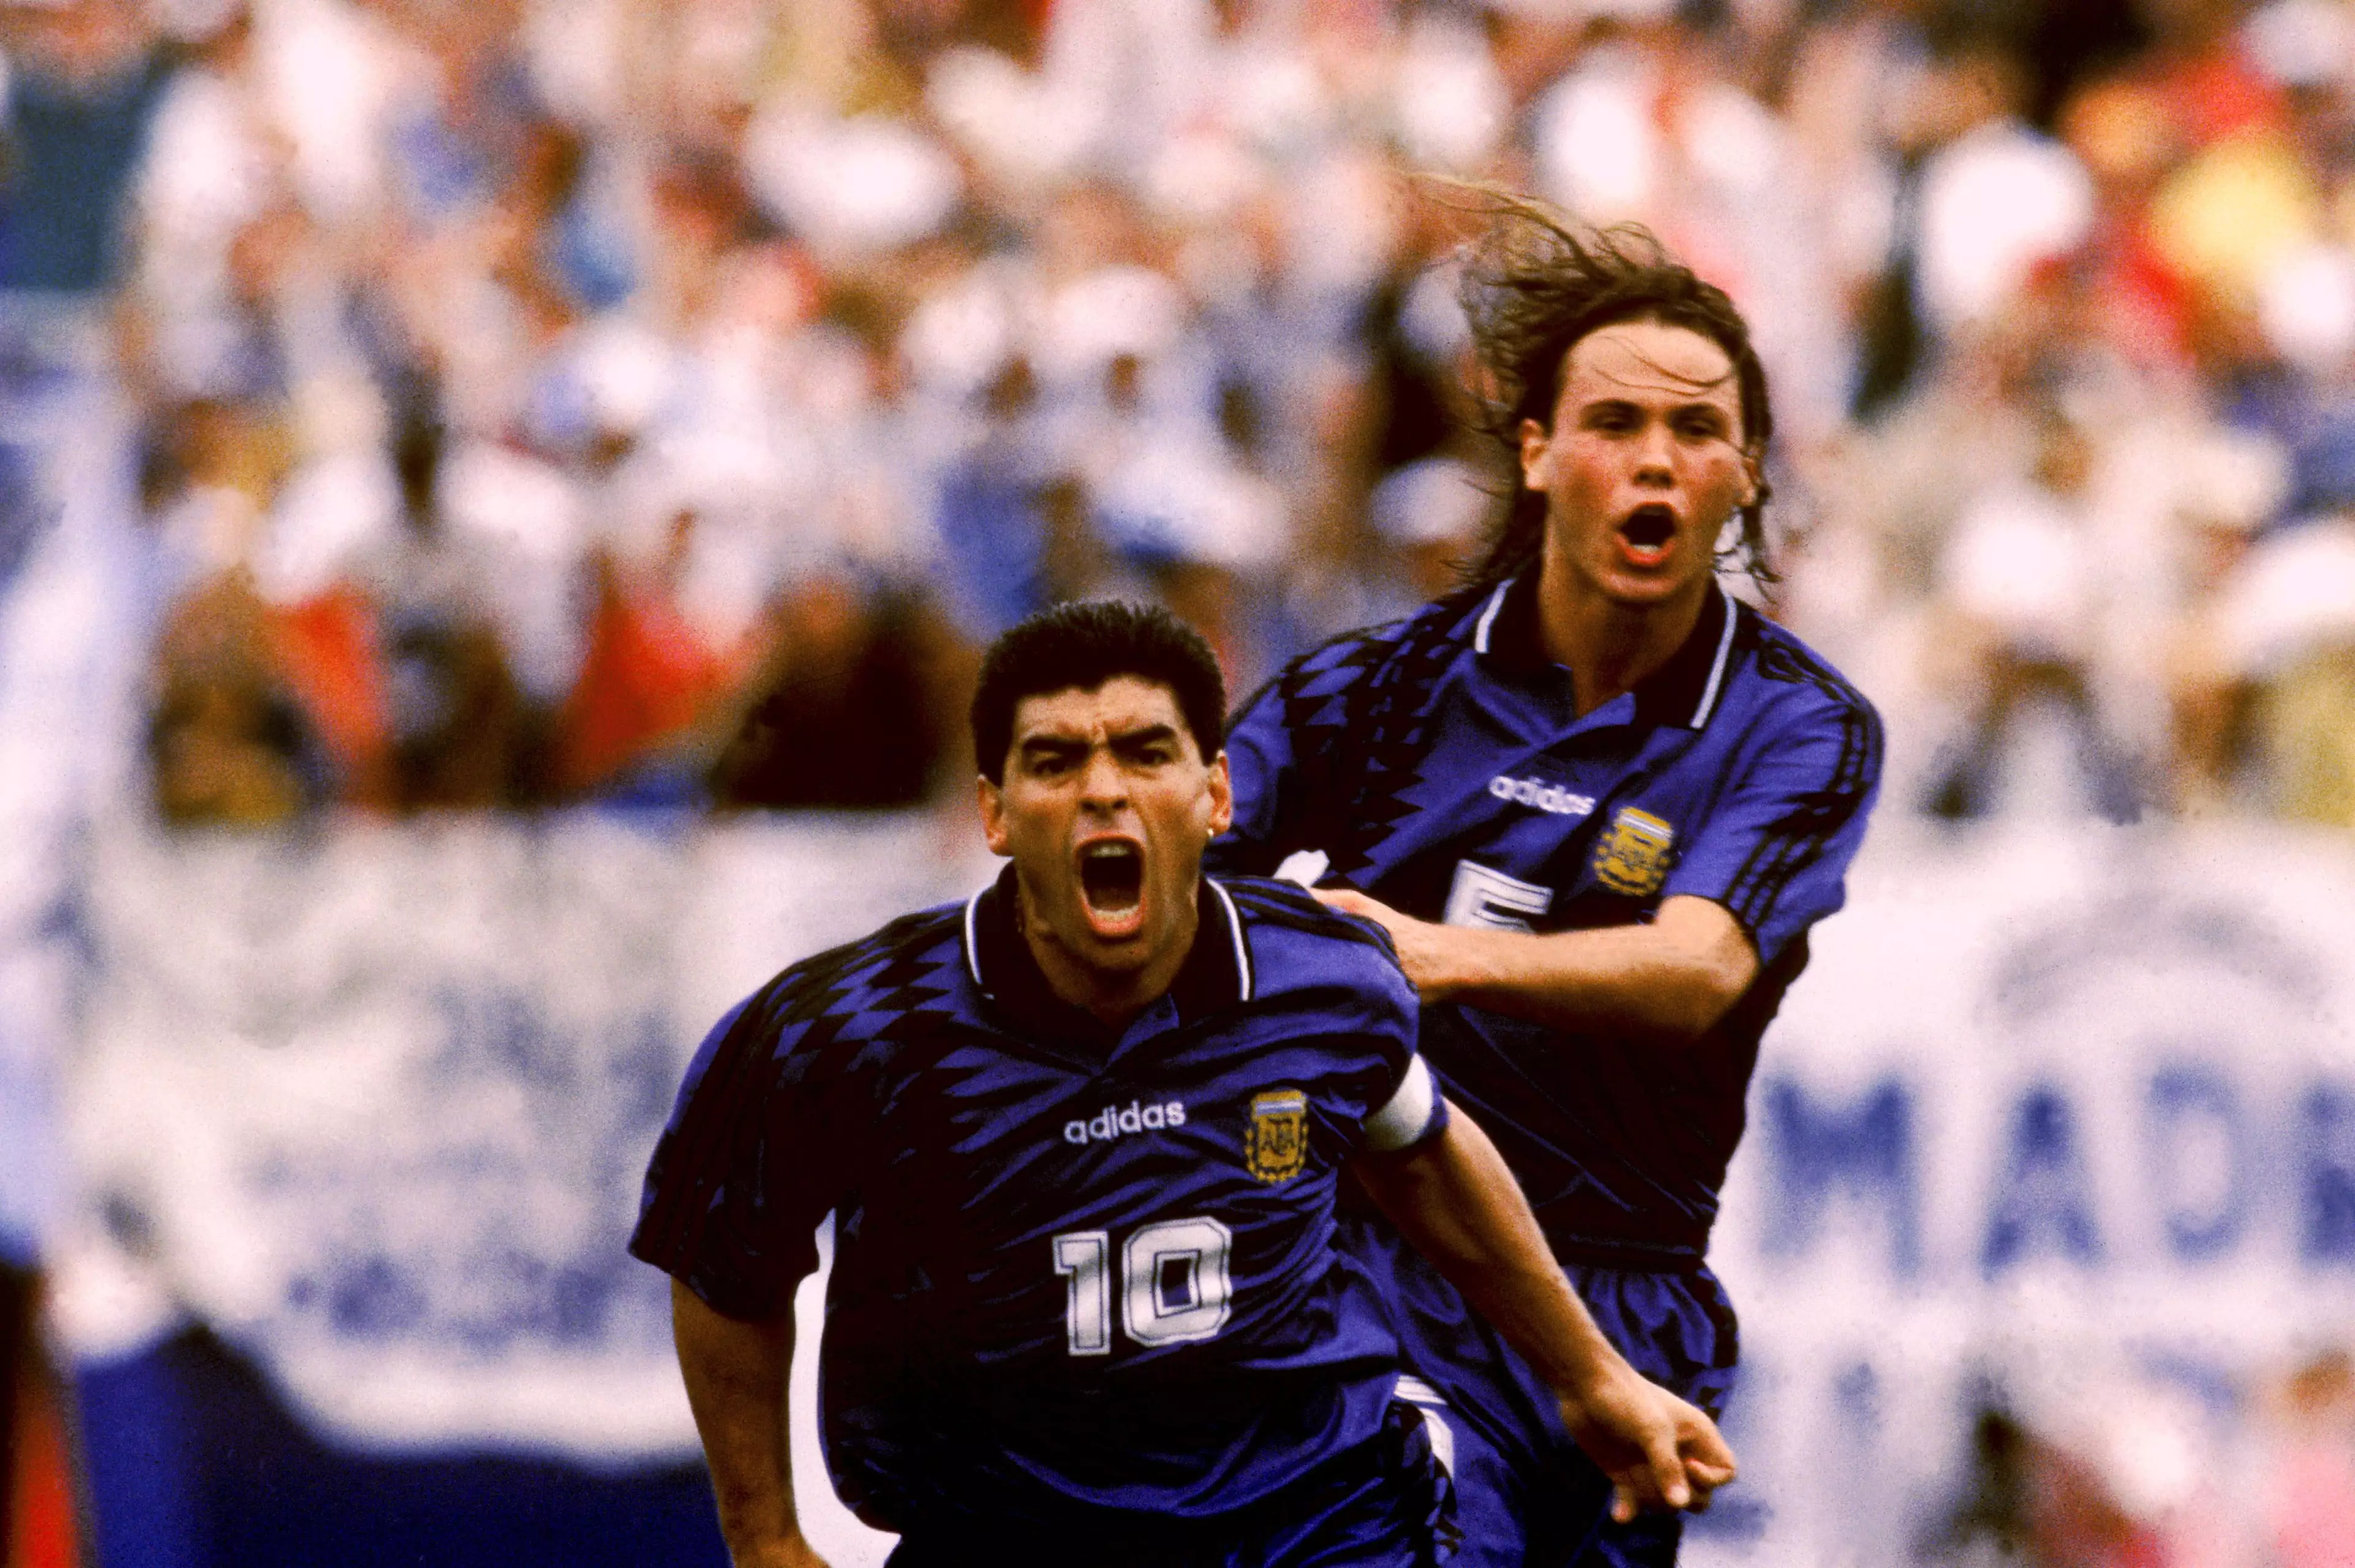 Maradona celebrates his goal at the '94 World Cup. Image: PA Images